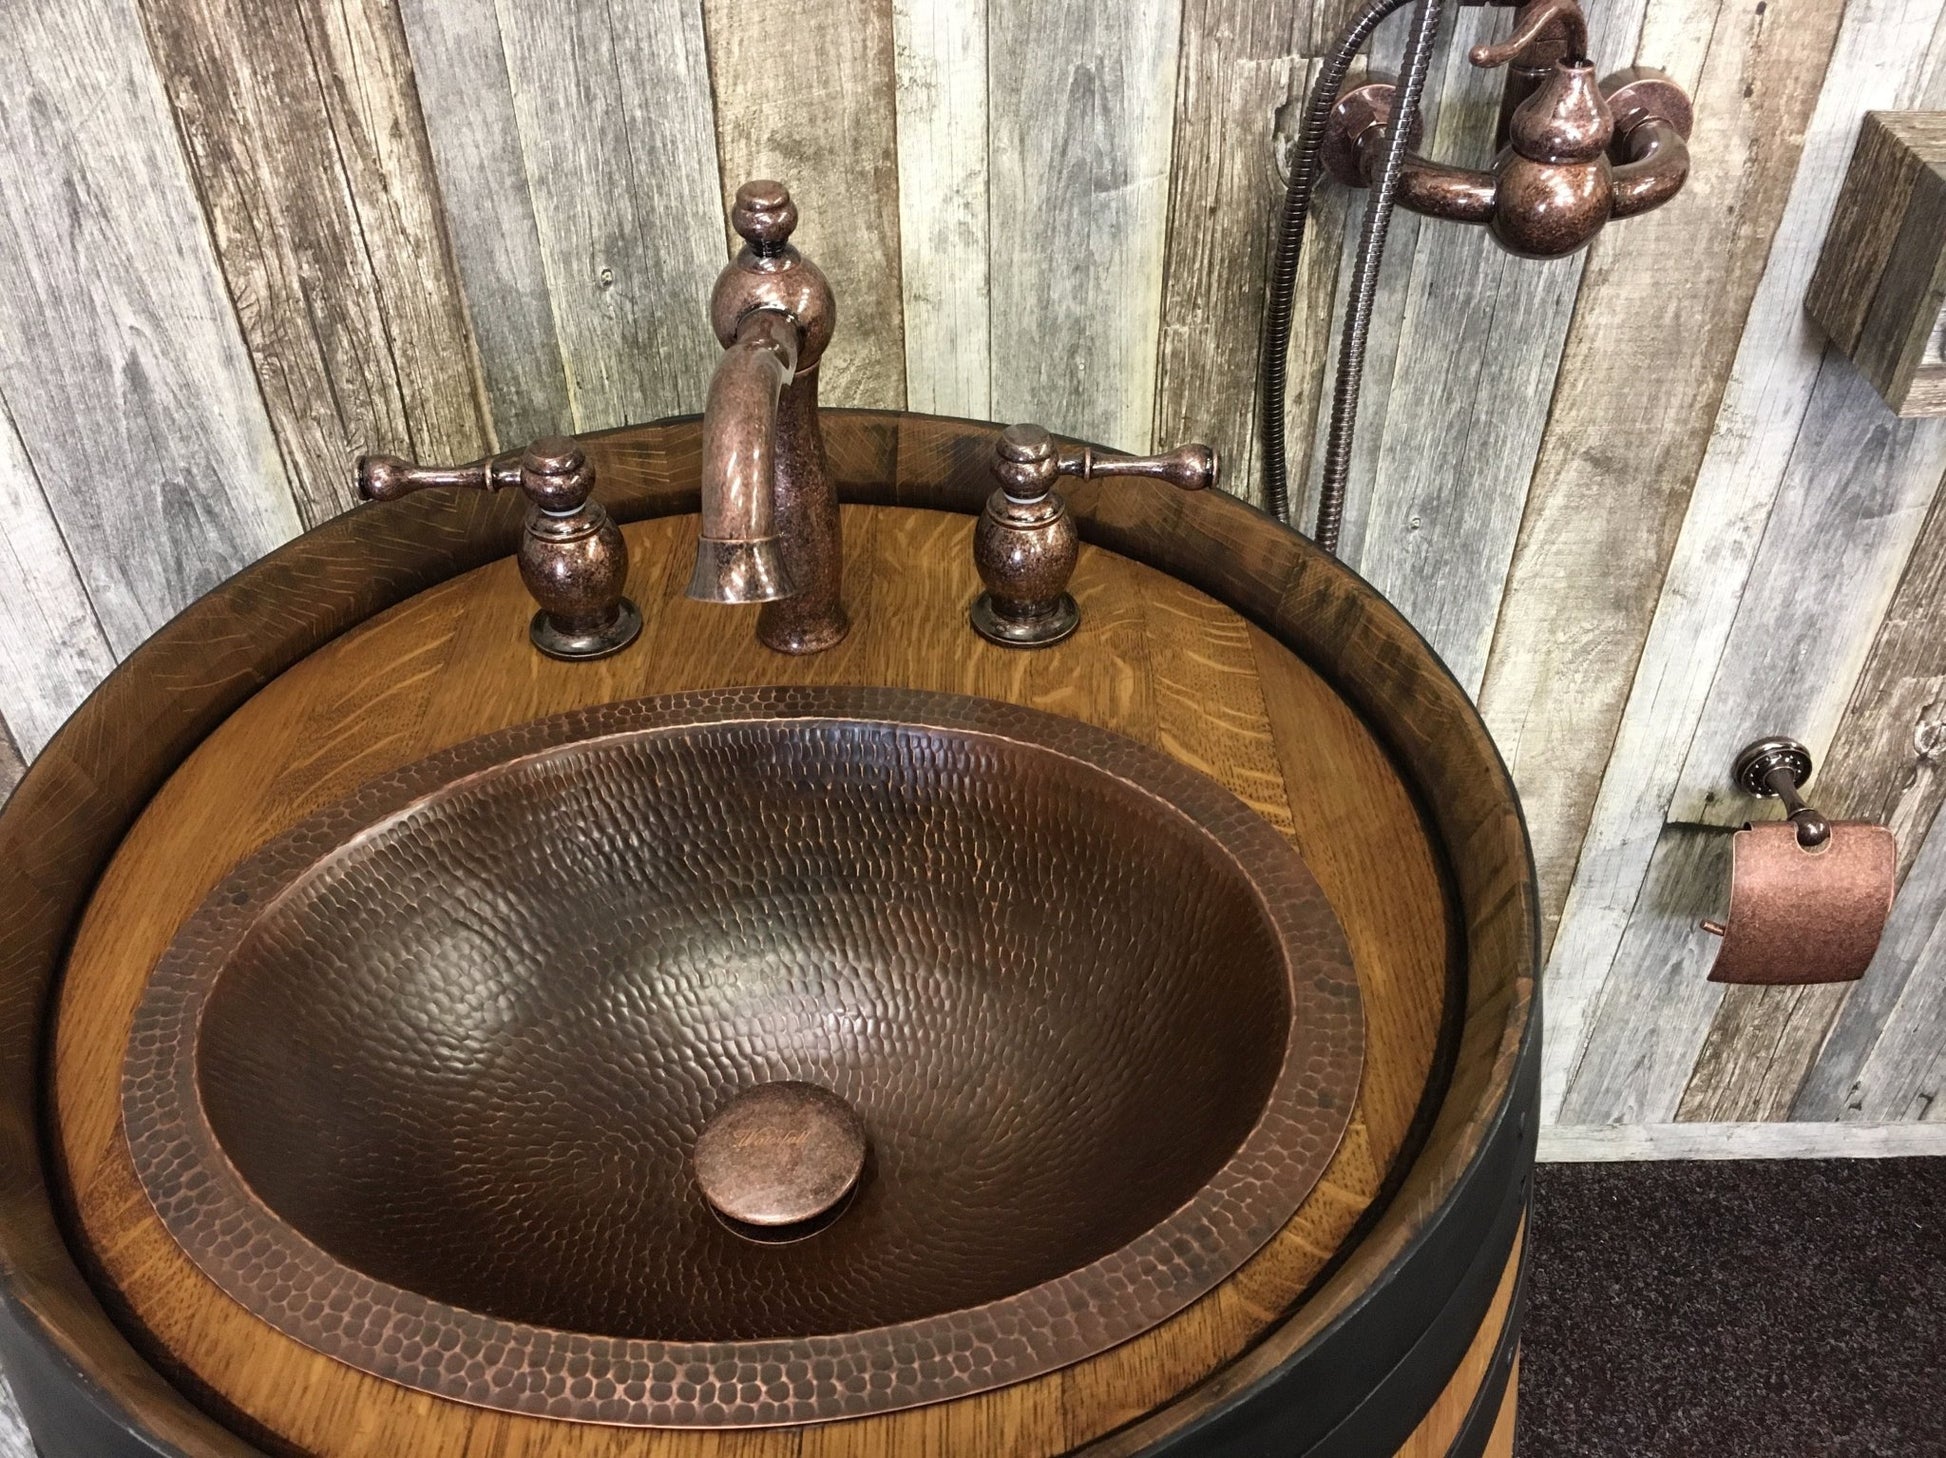 Widespread Antique Copper Basin Faucet - |VESIMI Design| Luxury and Rustic bathrooms online